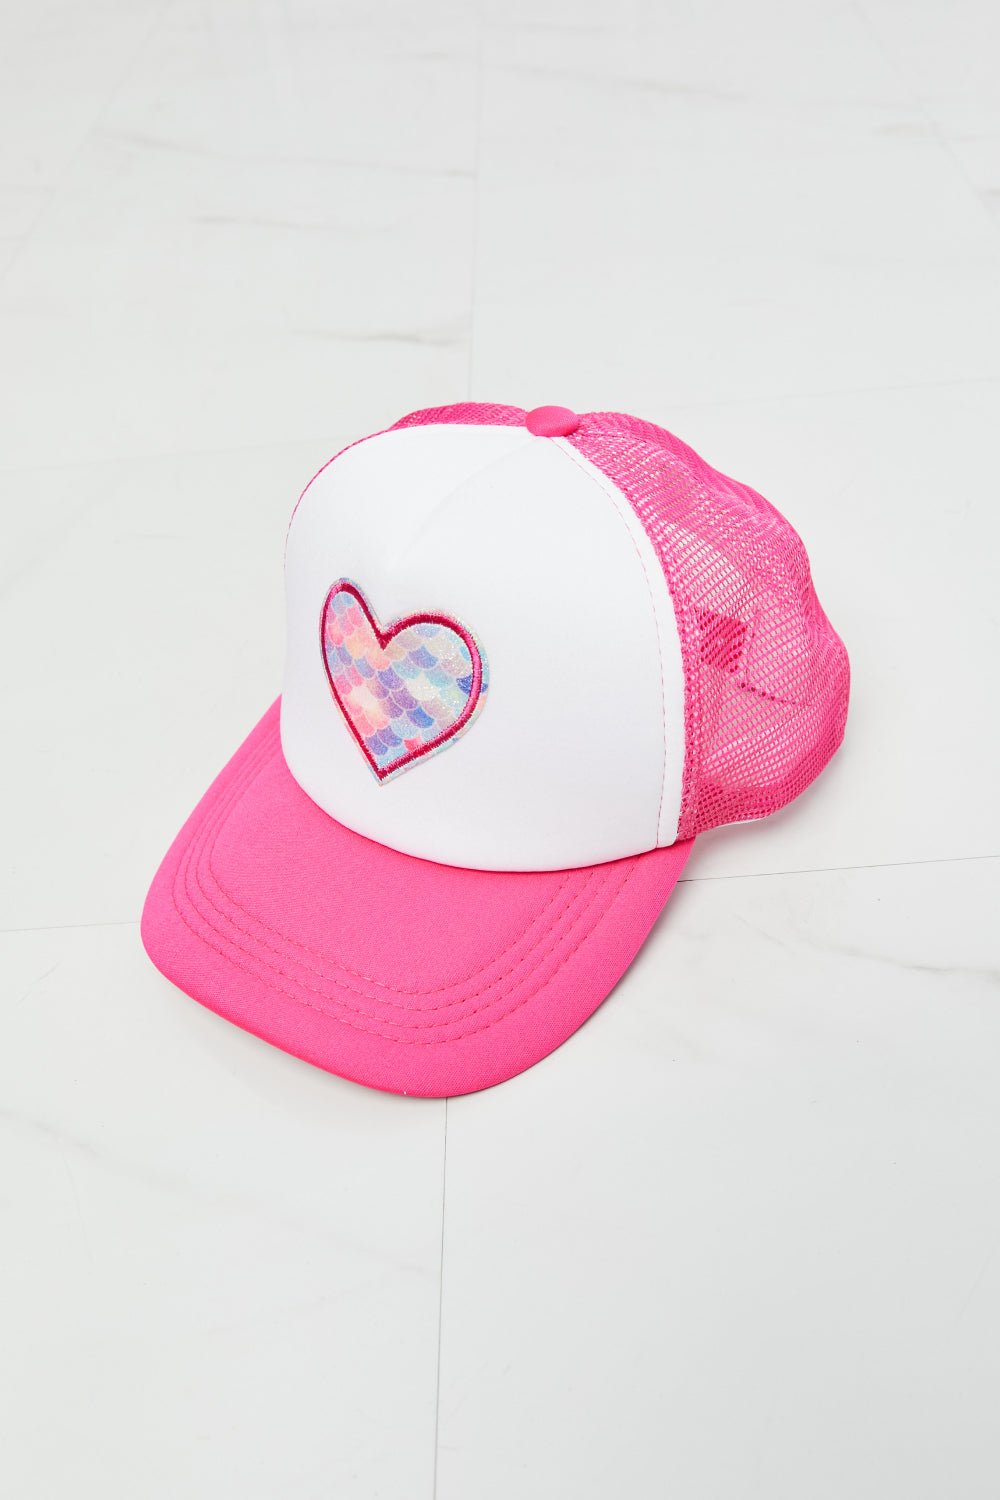 Heart Graphic Trucker Hat in Fuchsia PinkHatFame